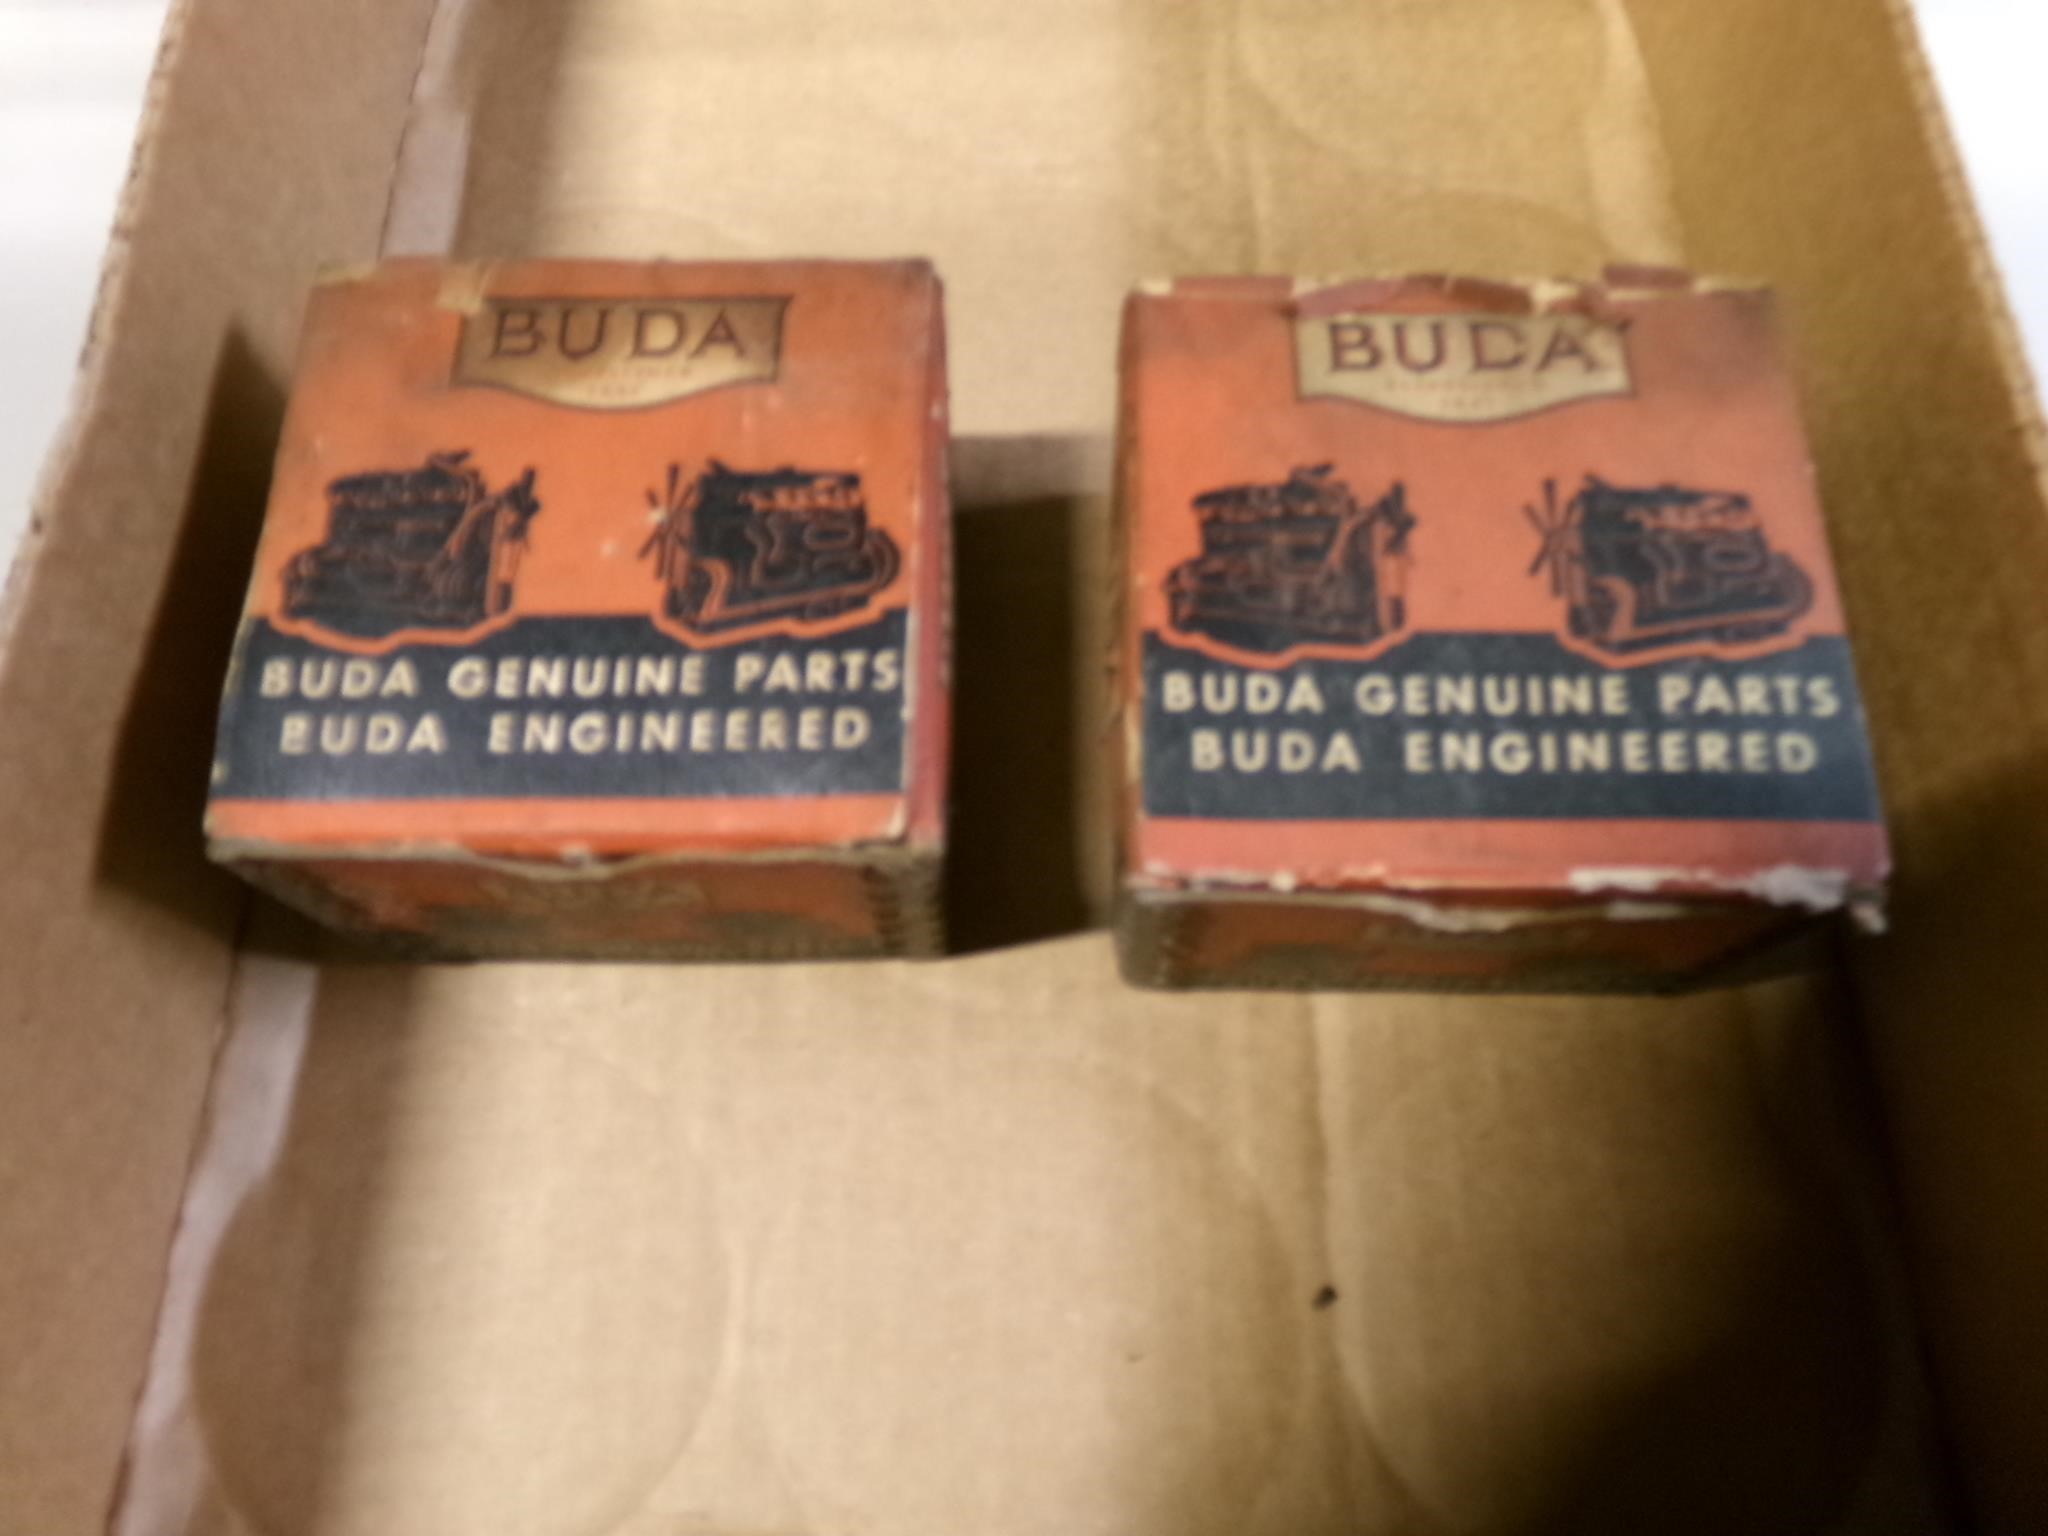 2 Buda genuine parts boxes